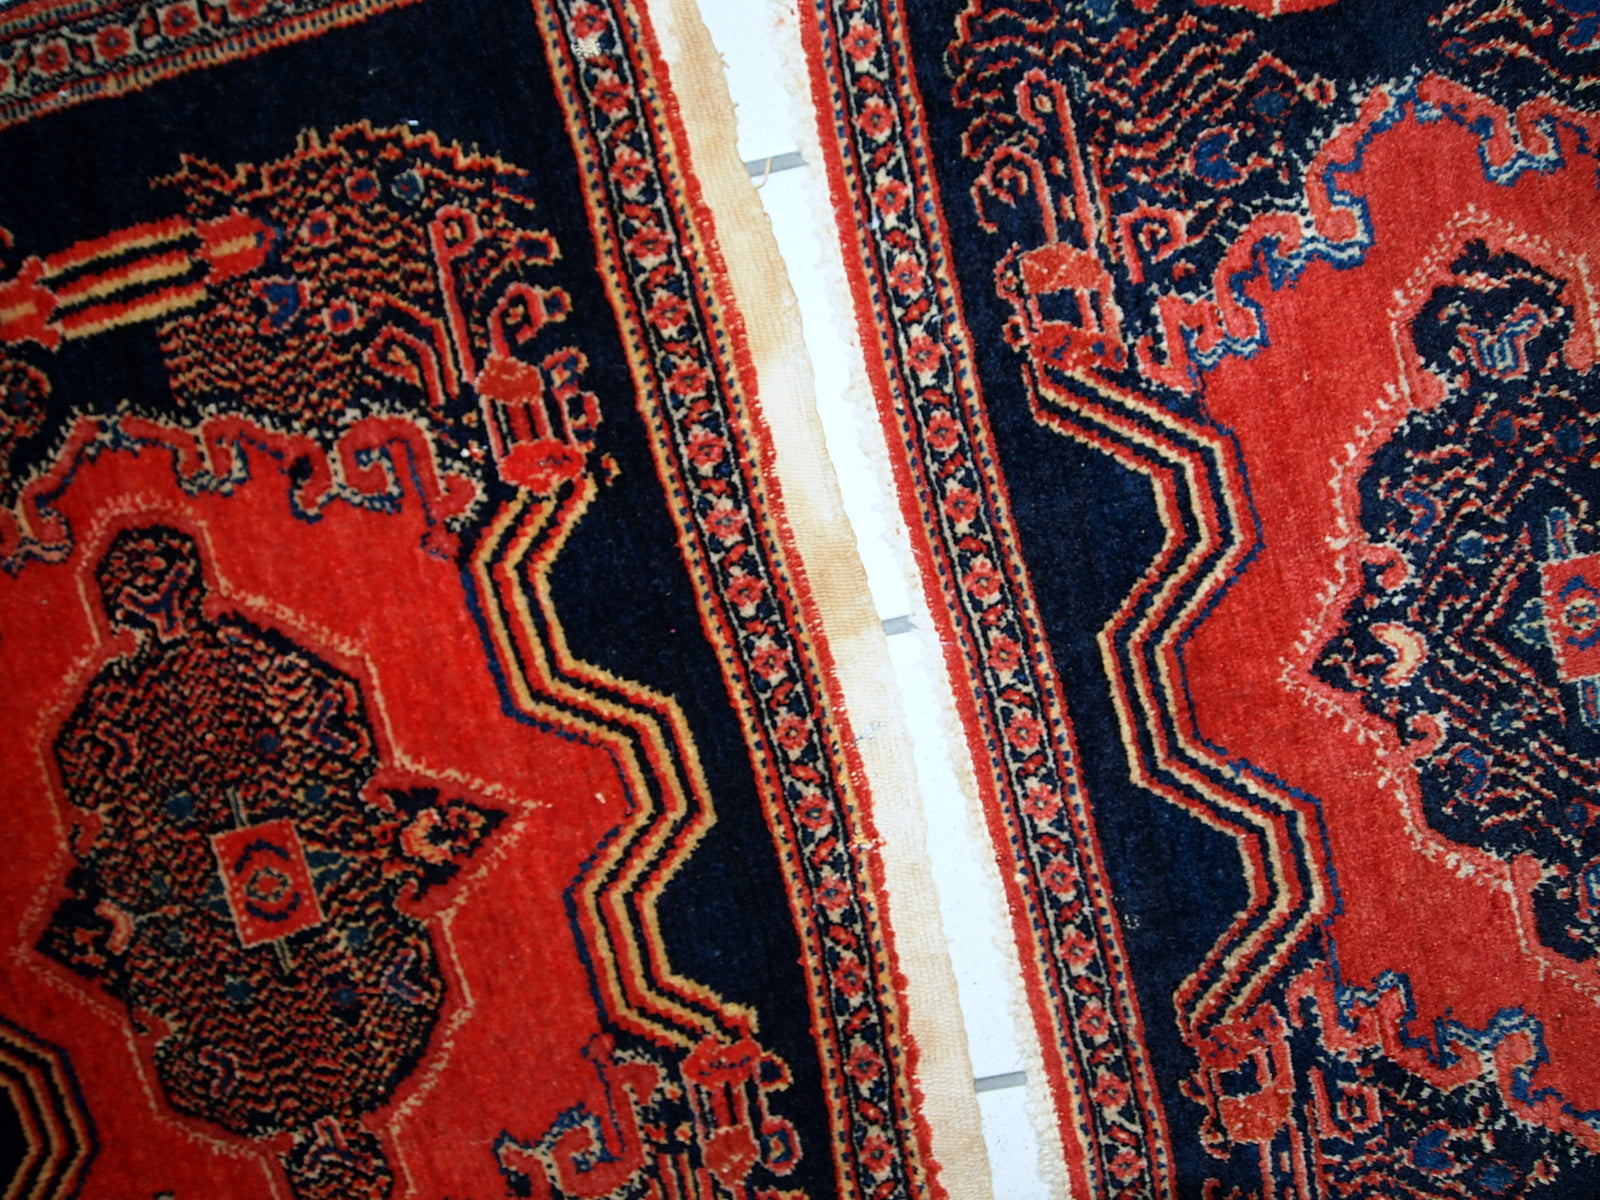 Handmade antique Persian pair of Senneh rugs, 1900s